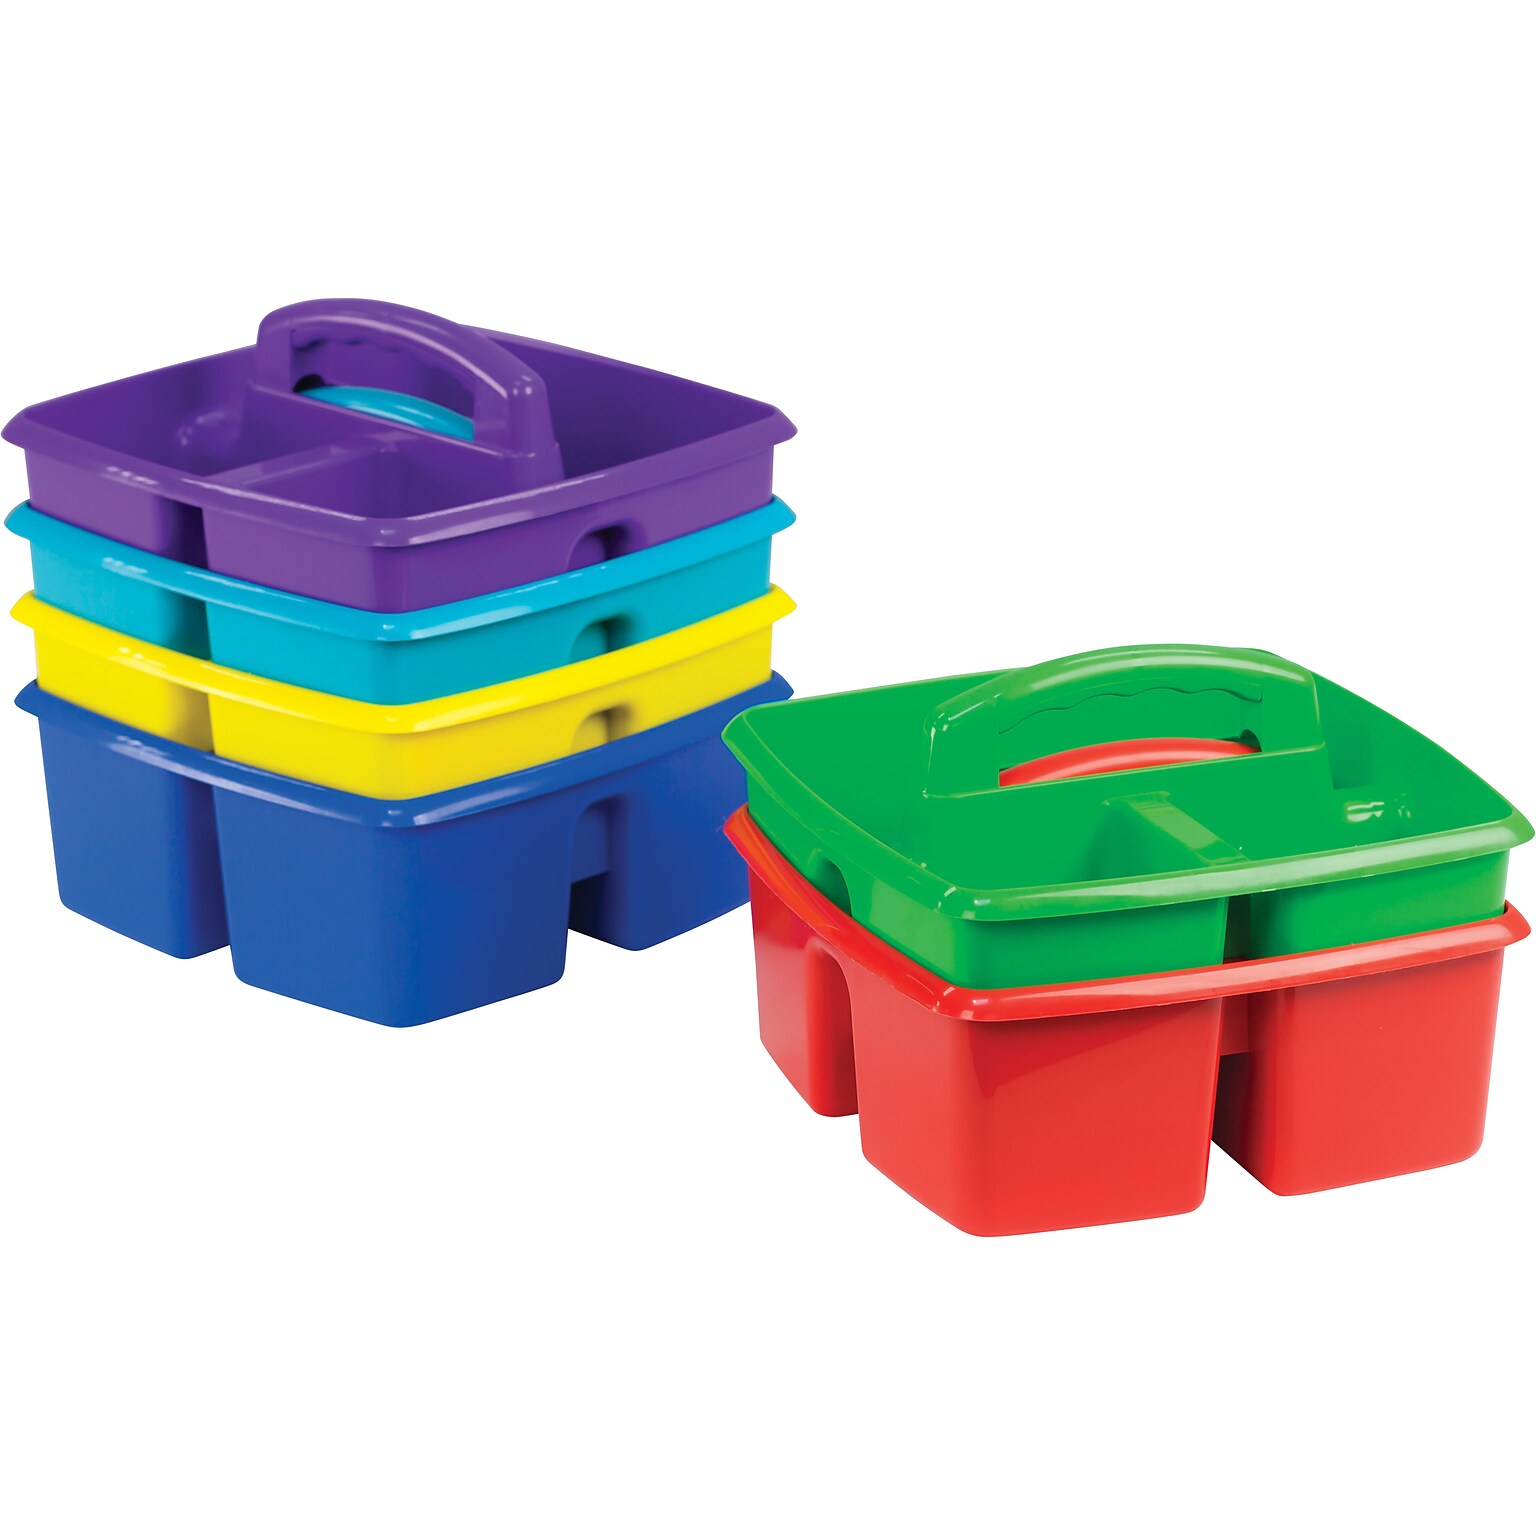 Storex Small Classroom Caddies with 3 Compartments, 5.25 x 9.25 x 9.25, Assorted Colors, 6/Carton (00940U06C)